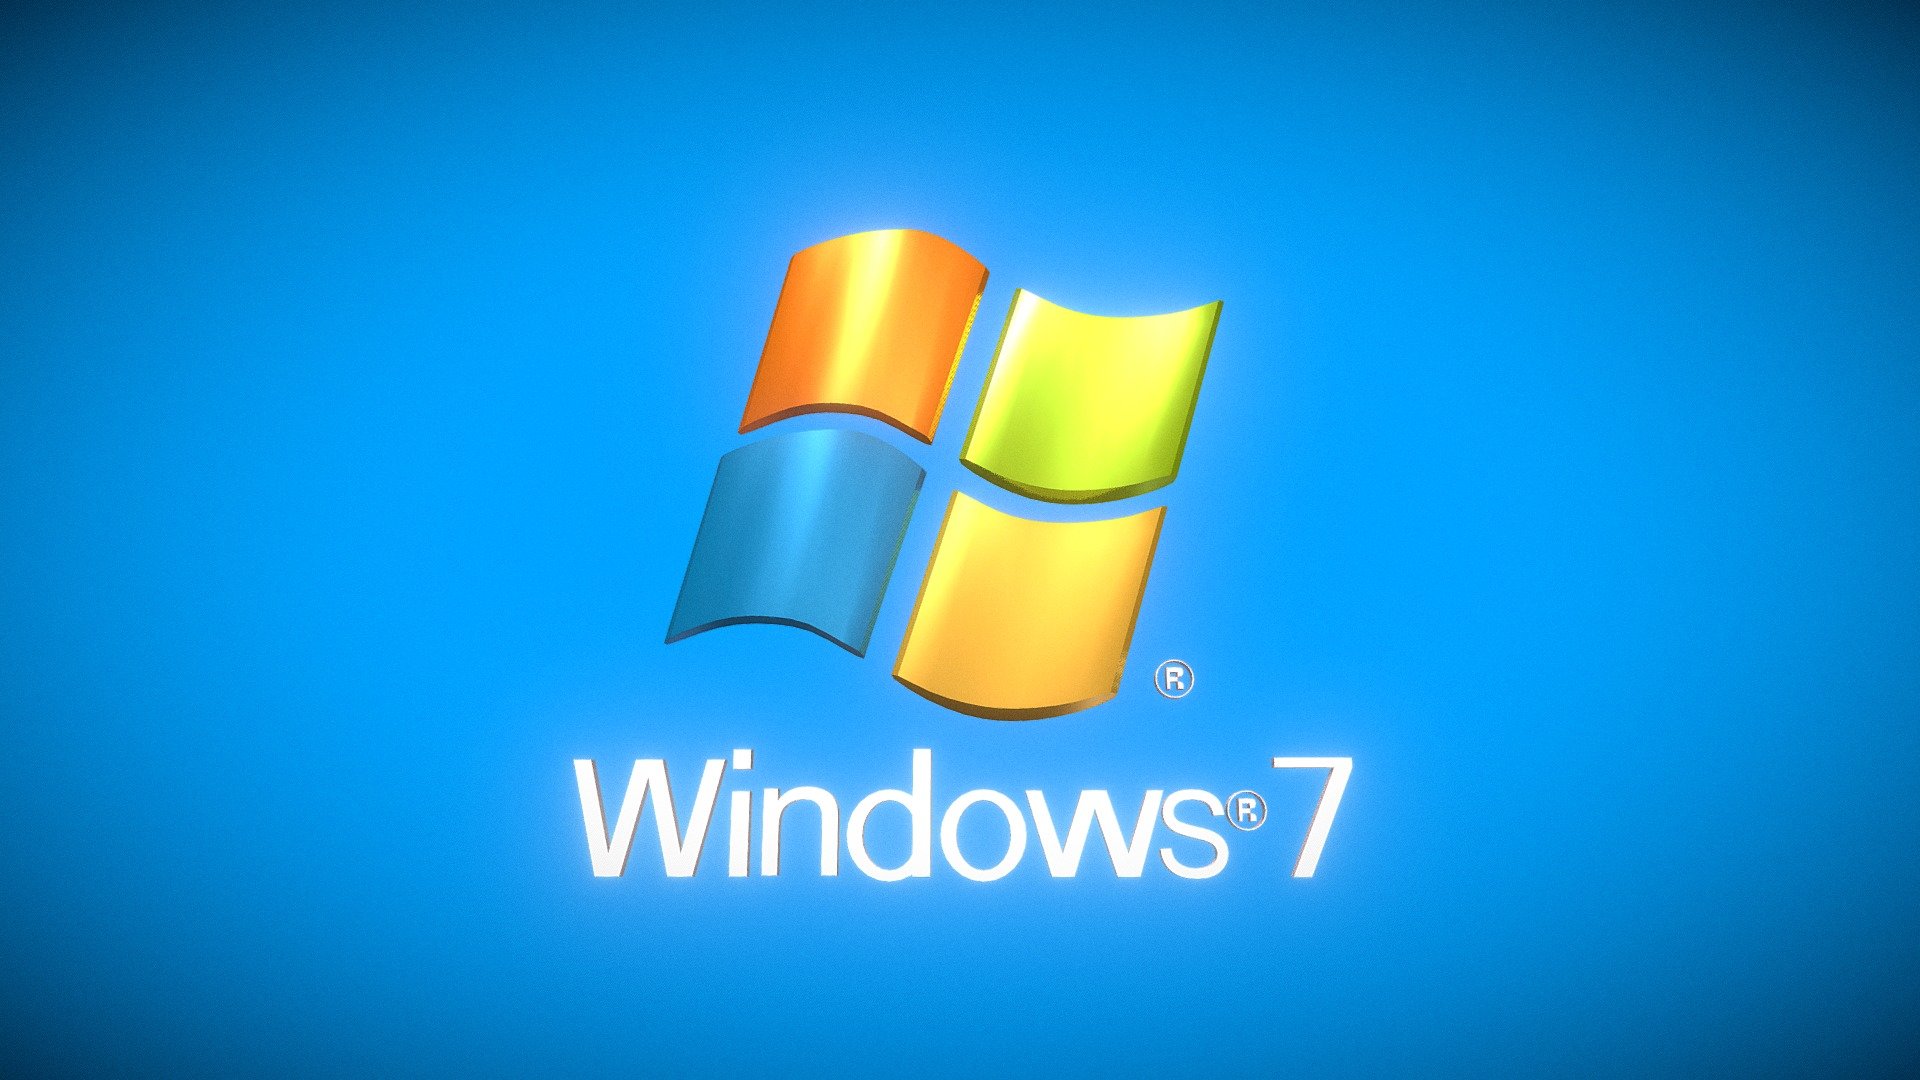 Windows 7 Logo Download Free 3d Model By Anthony Yanez Paulyanez 1adae28